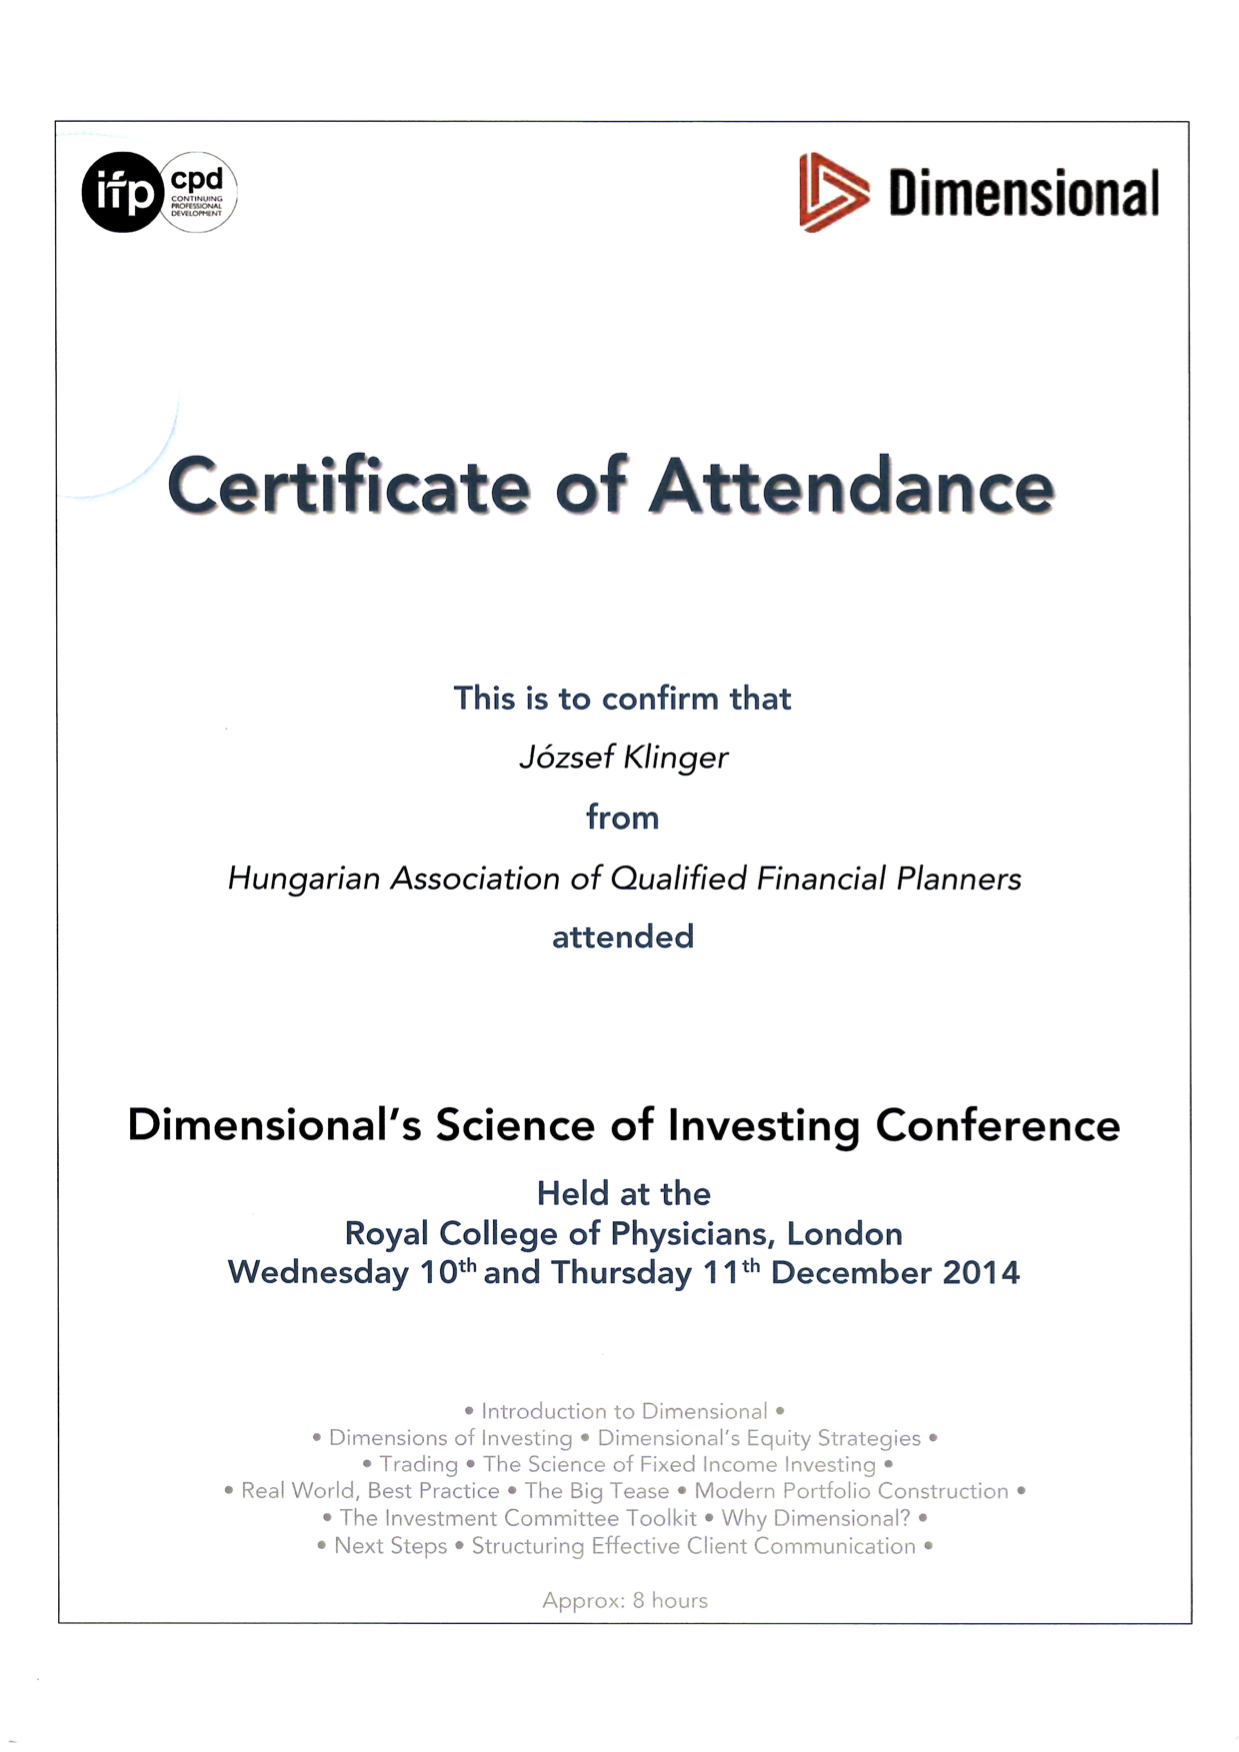 JK_Dimensional_Certificate_of_Attendance.1pdf.png